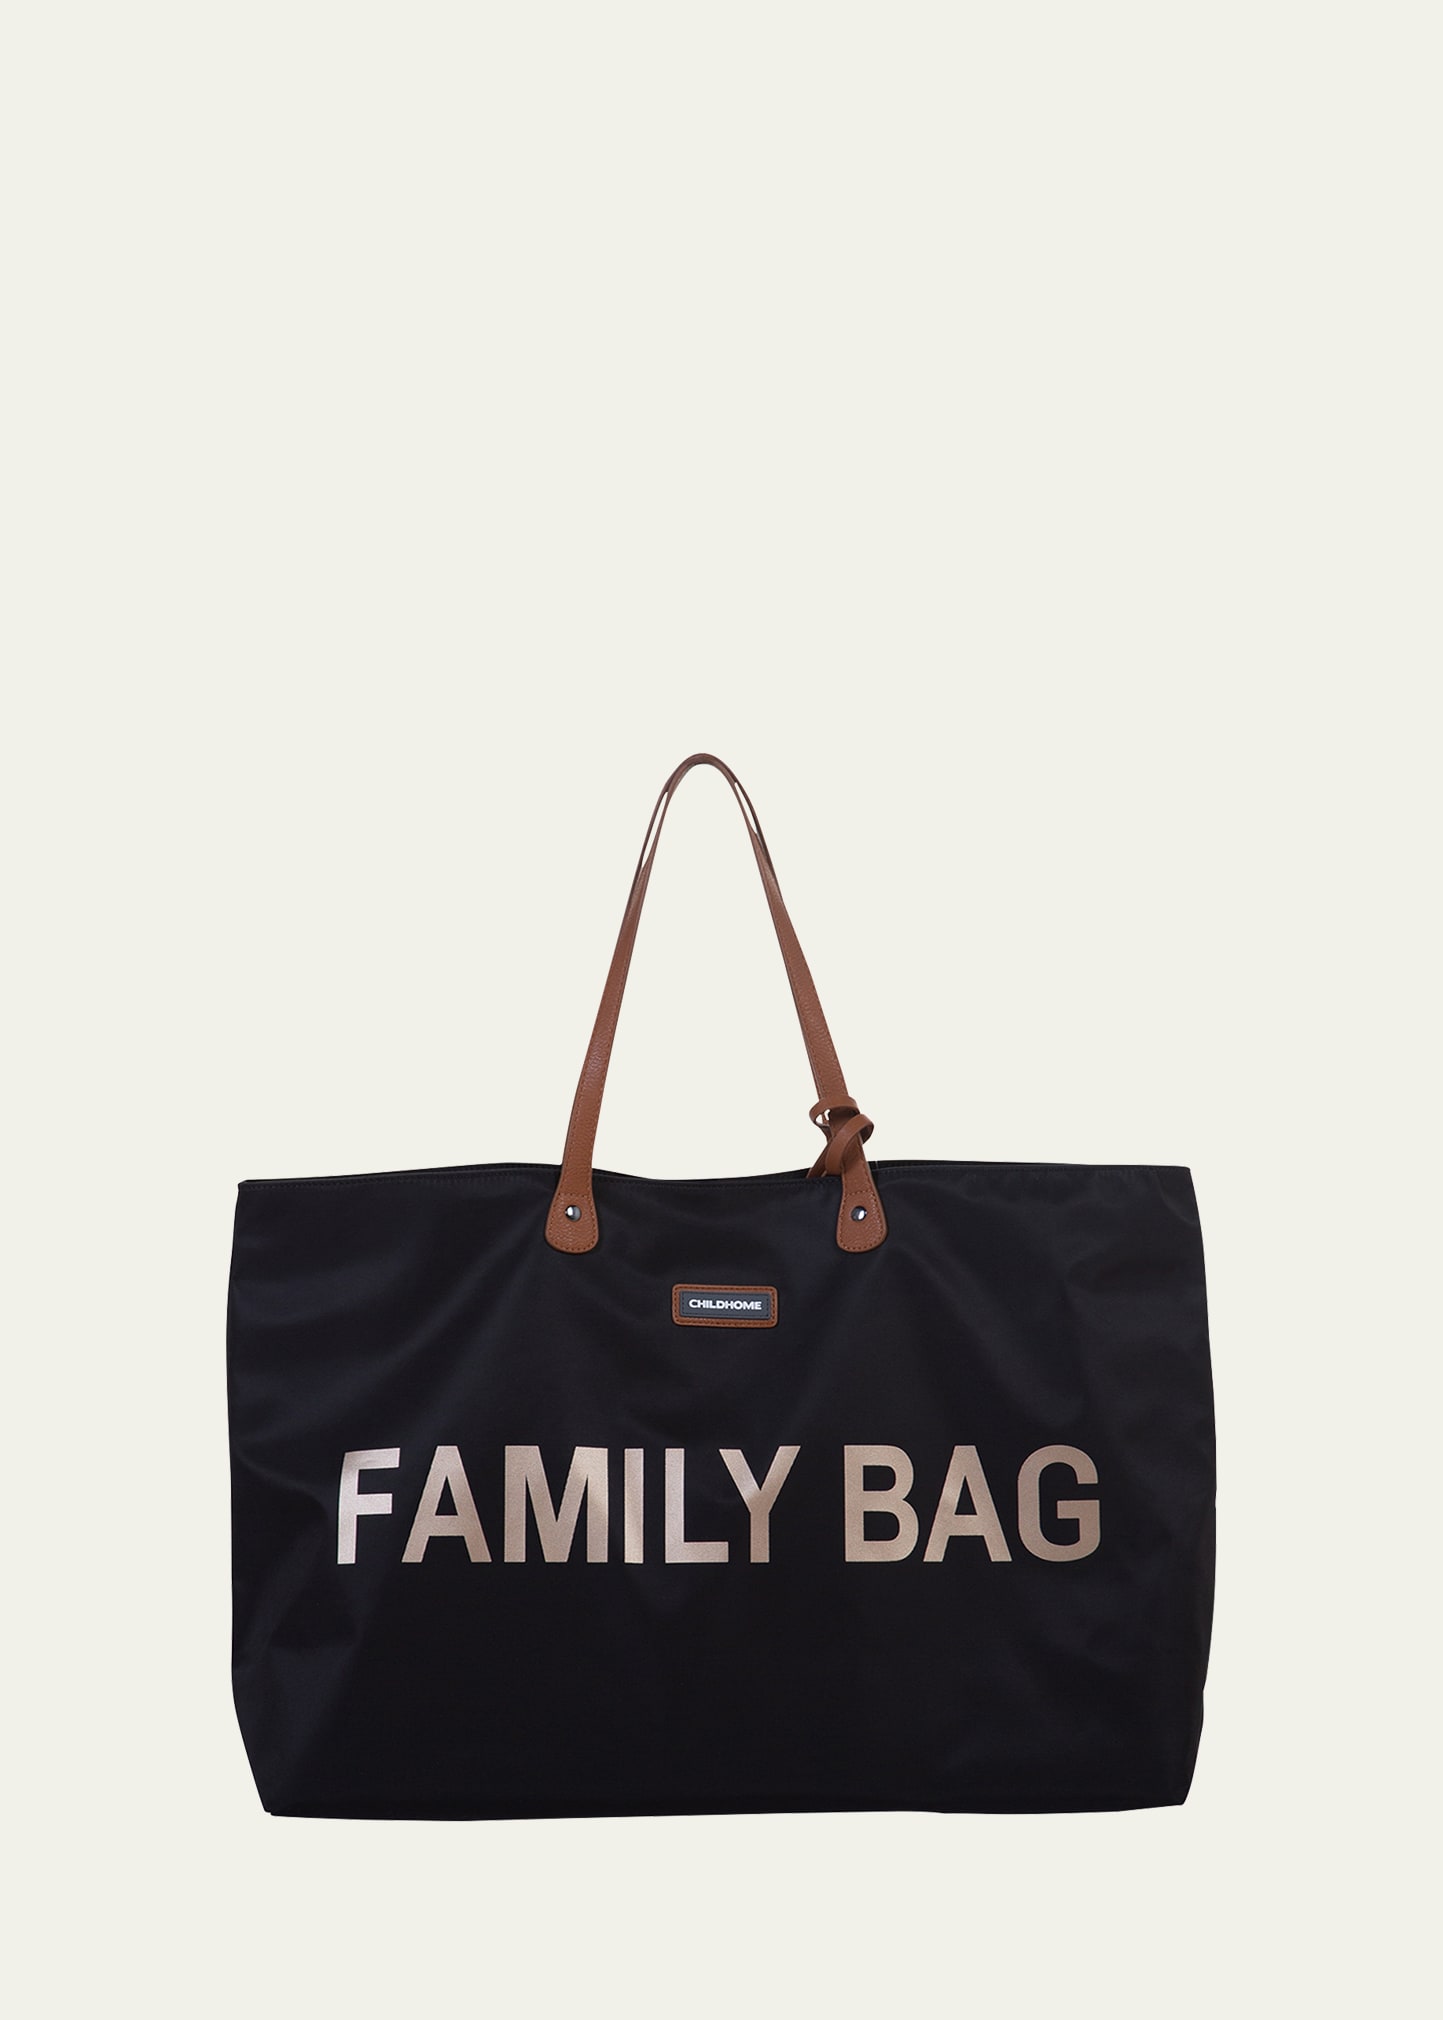 Childhome Family Bag In Black